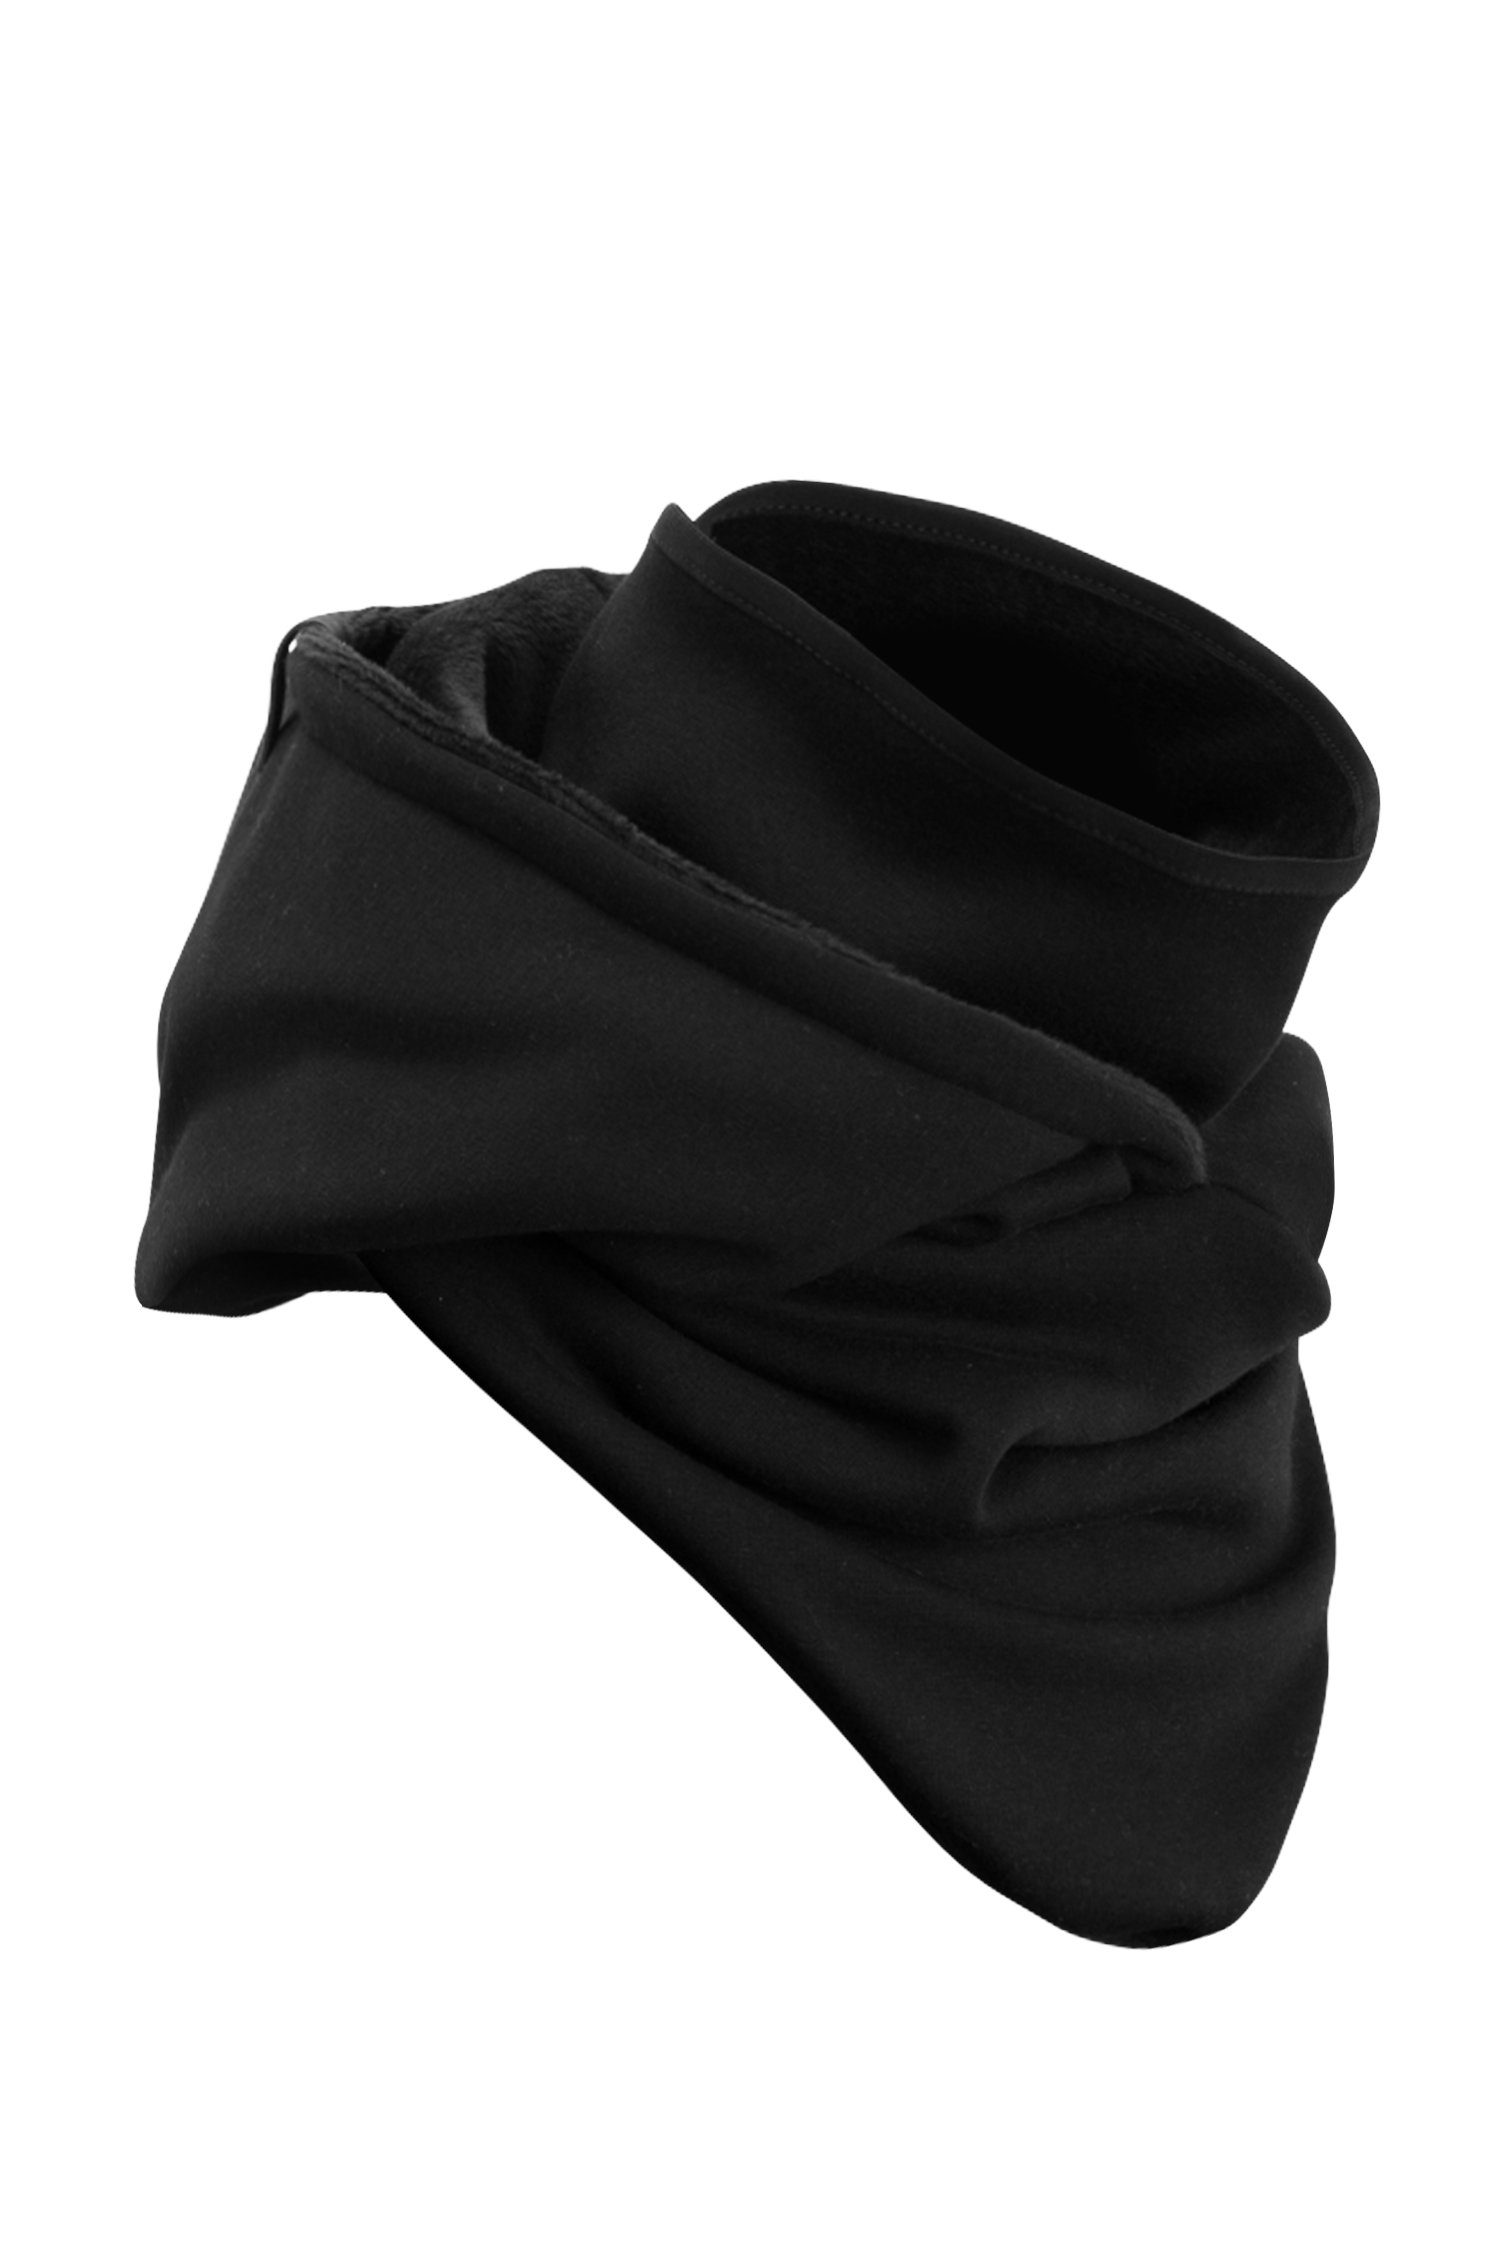 Manufaktur13 Schal Hooded Loop - Kapuzenschal, Schal aus Alpenfleece, mit integriertem Windbreaker Black Out